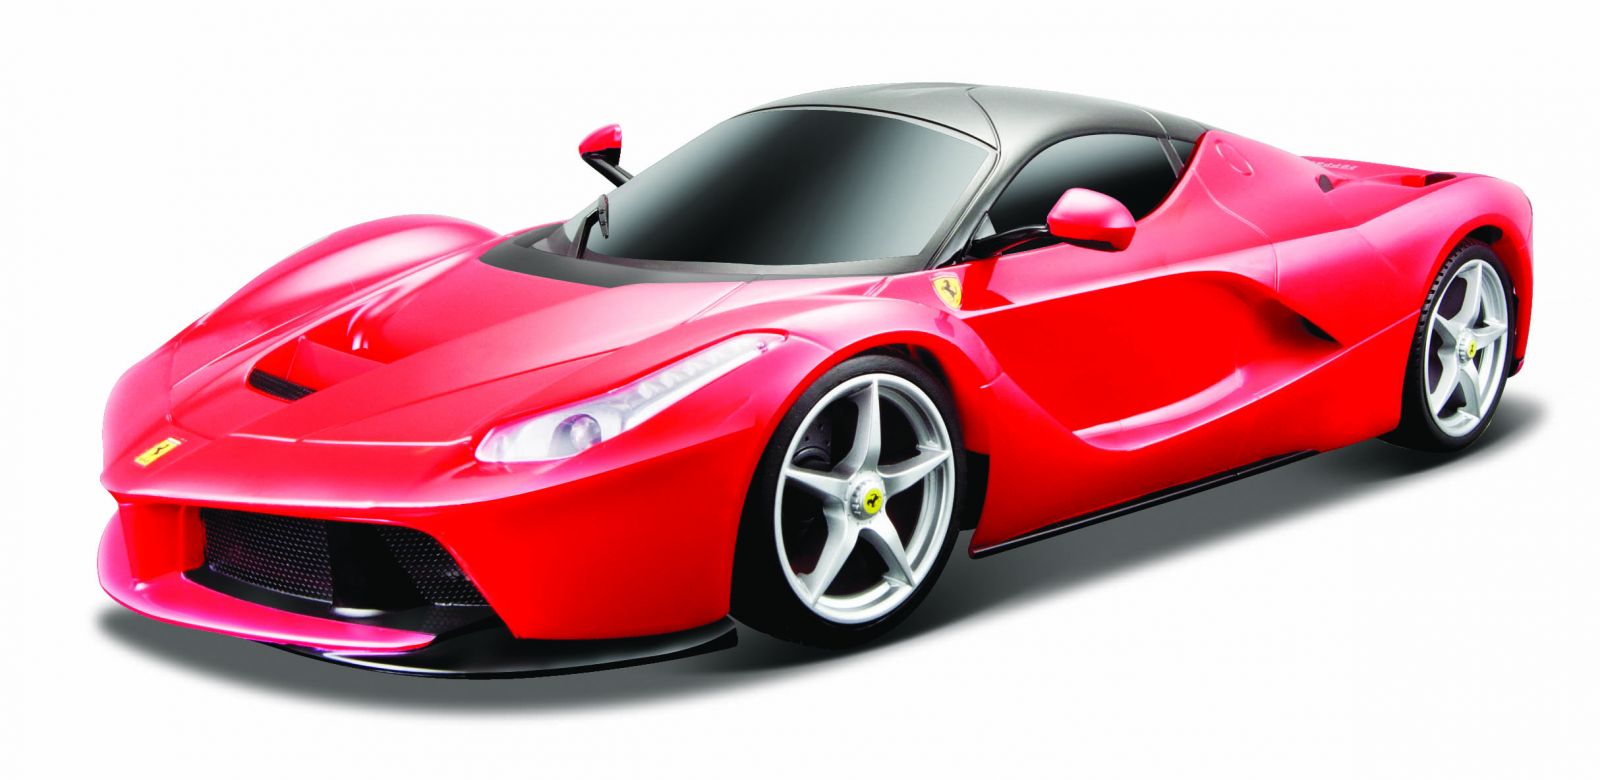 Maisto - RC Ferrari Laferrari 1:24 - červené 2,4 GHz